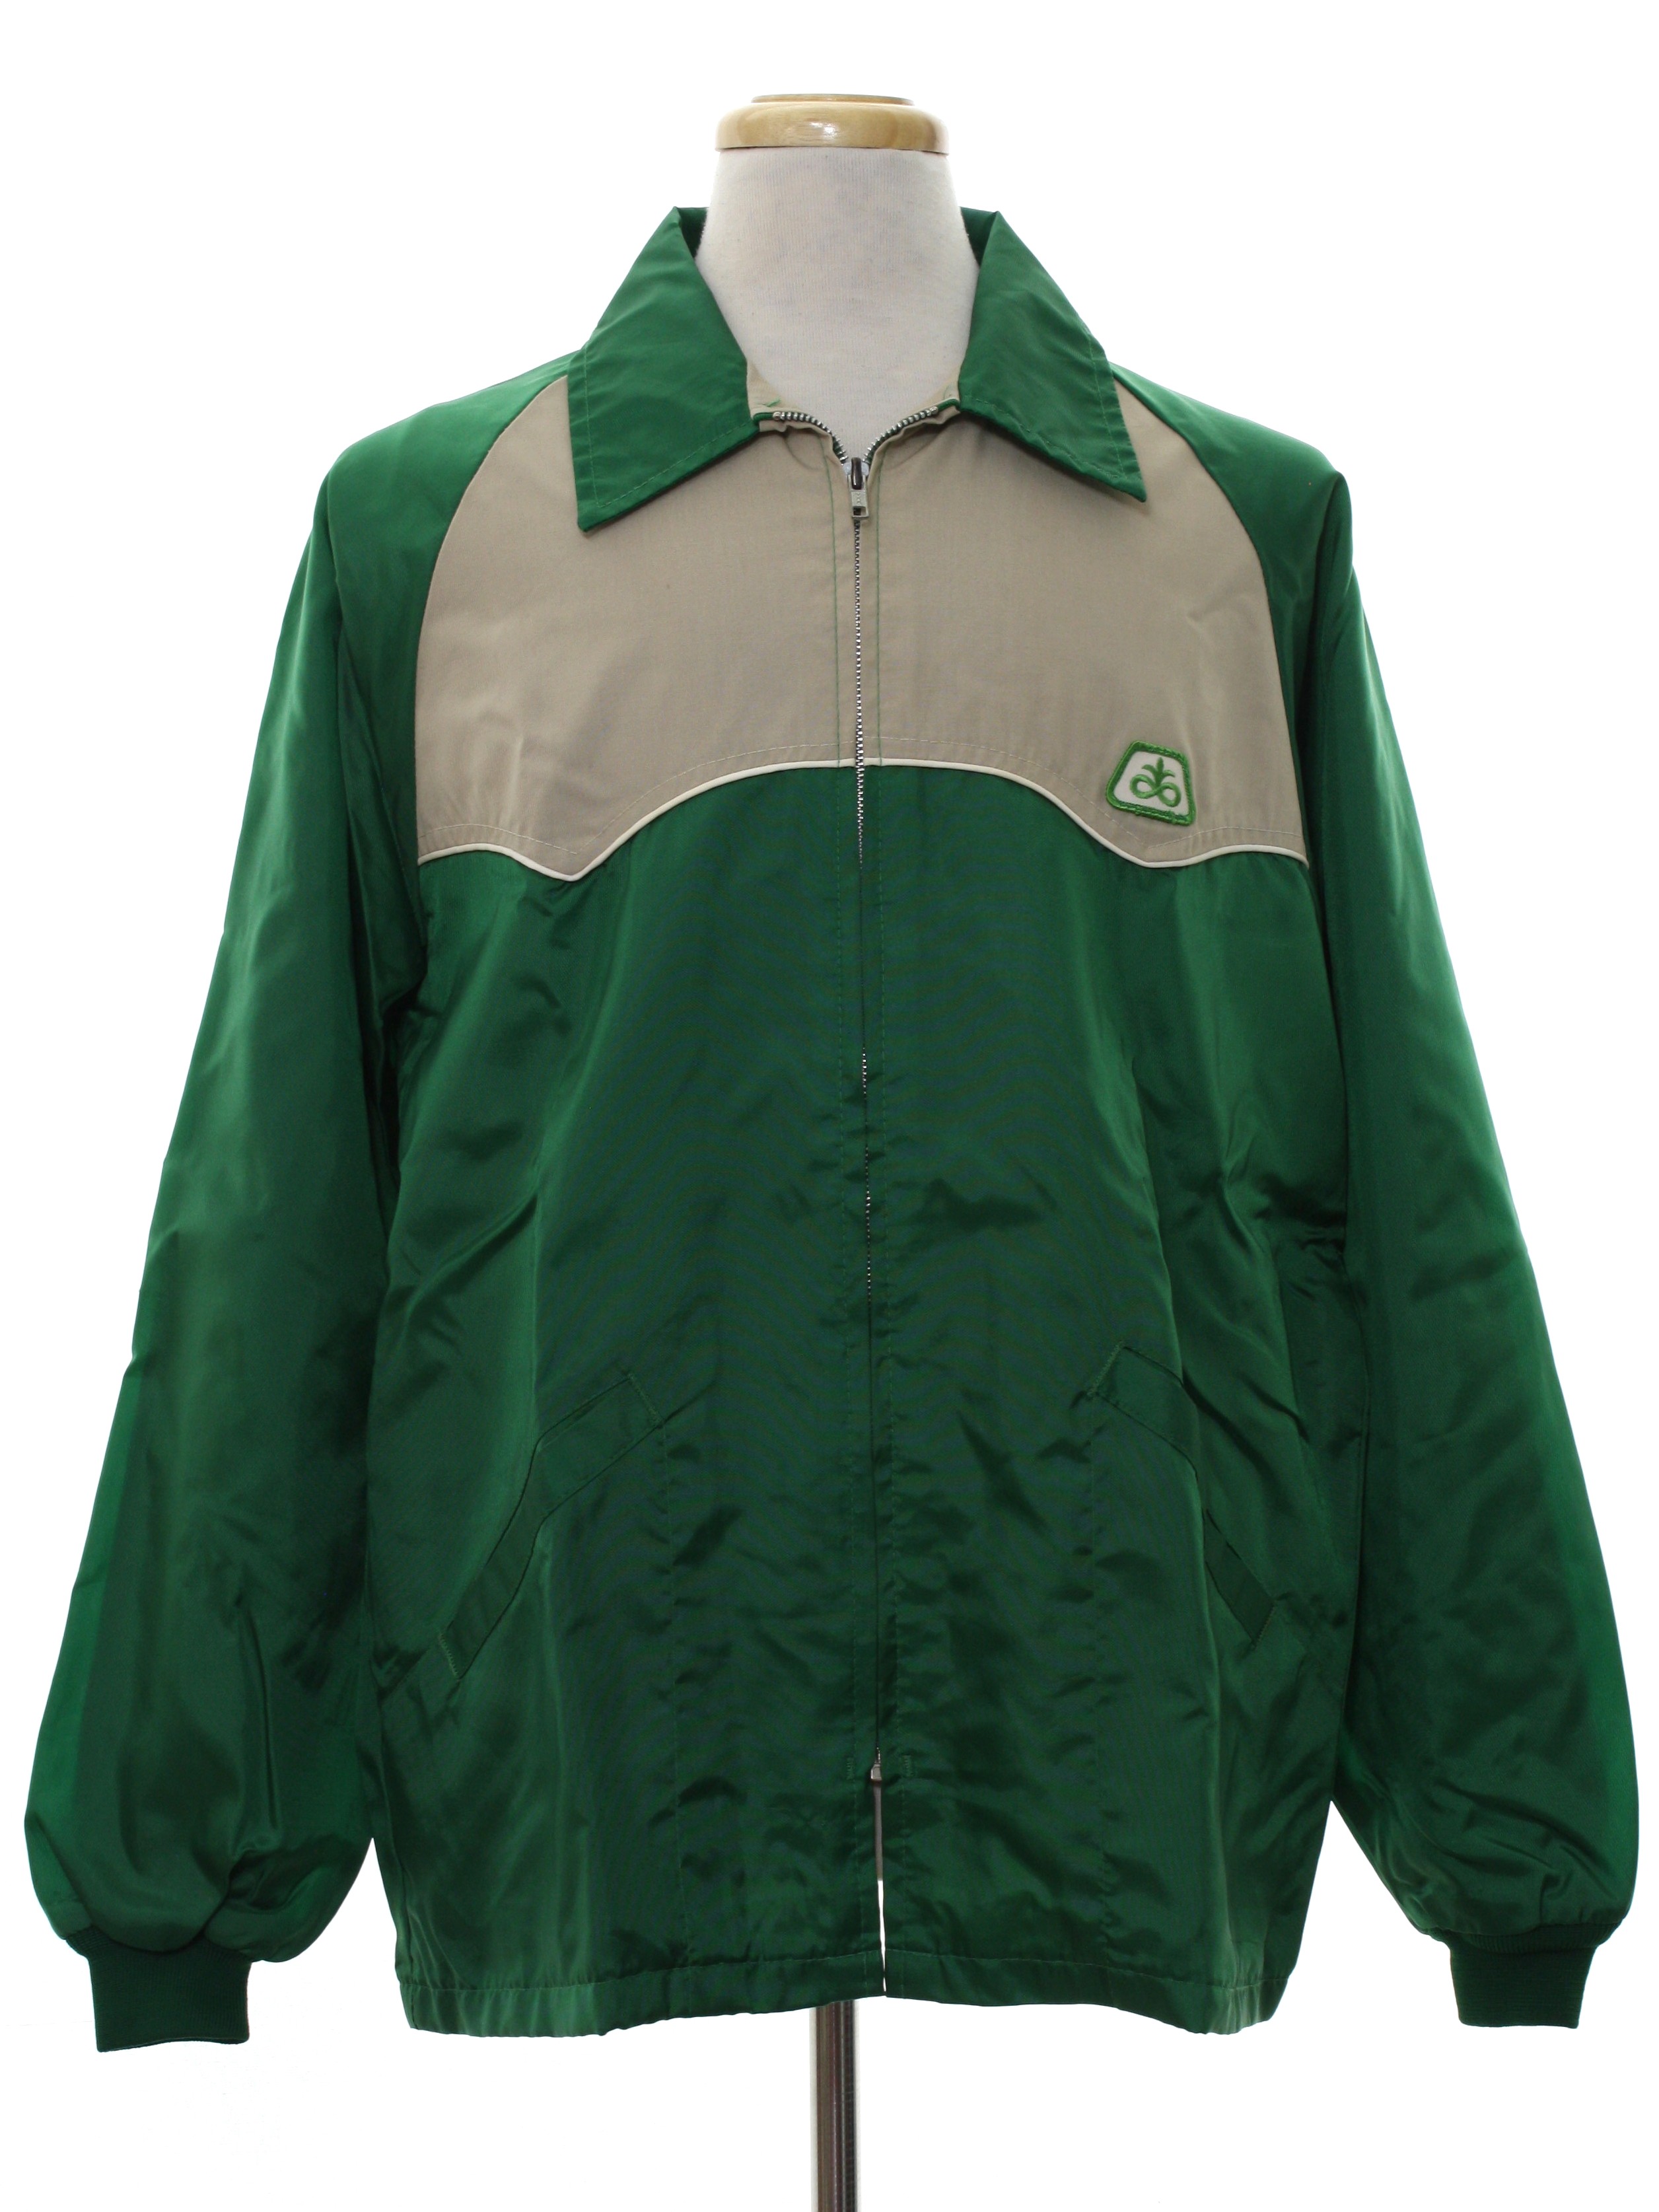 Retro 80's Jacket: 80s -Swingster- Mens green background nylon ribbed ...